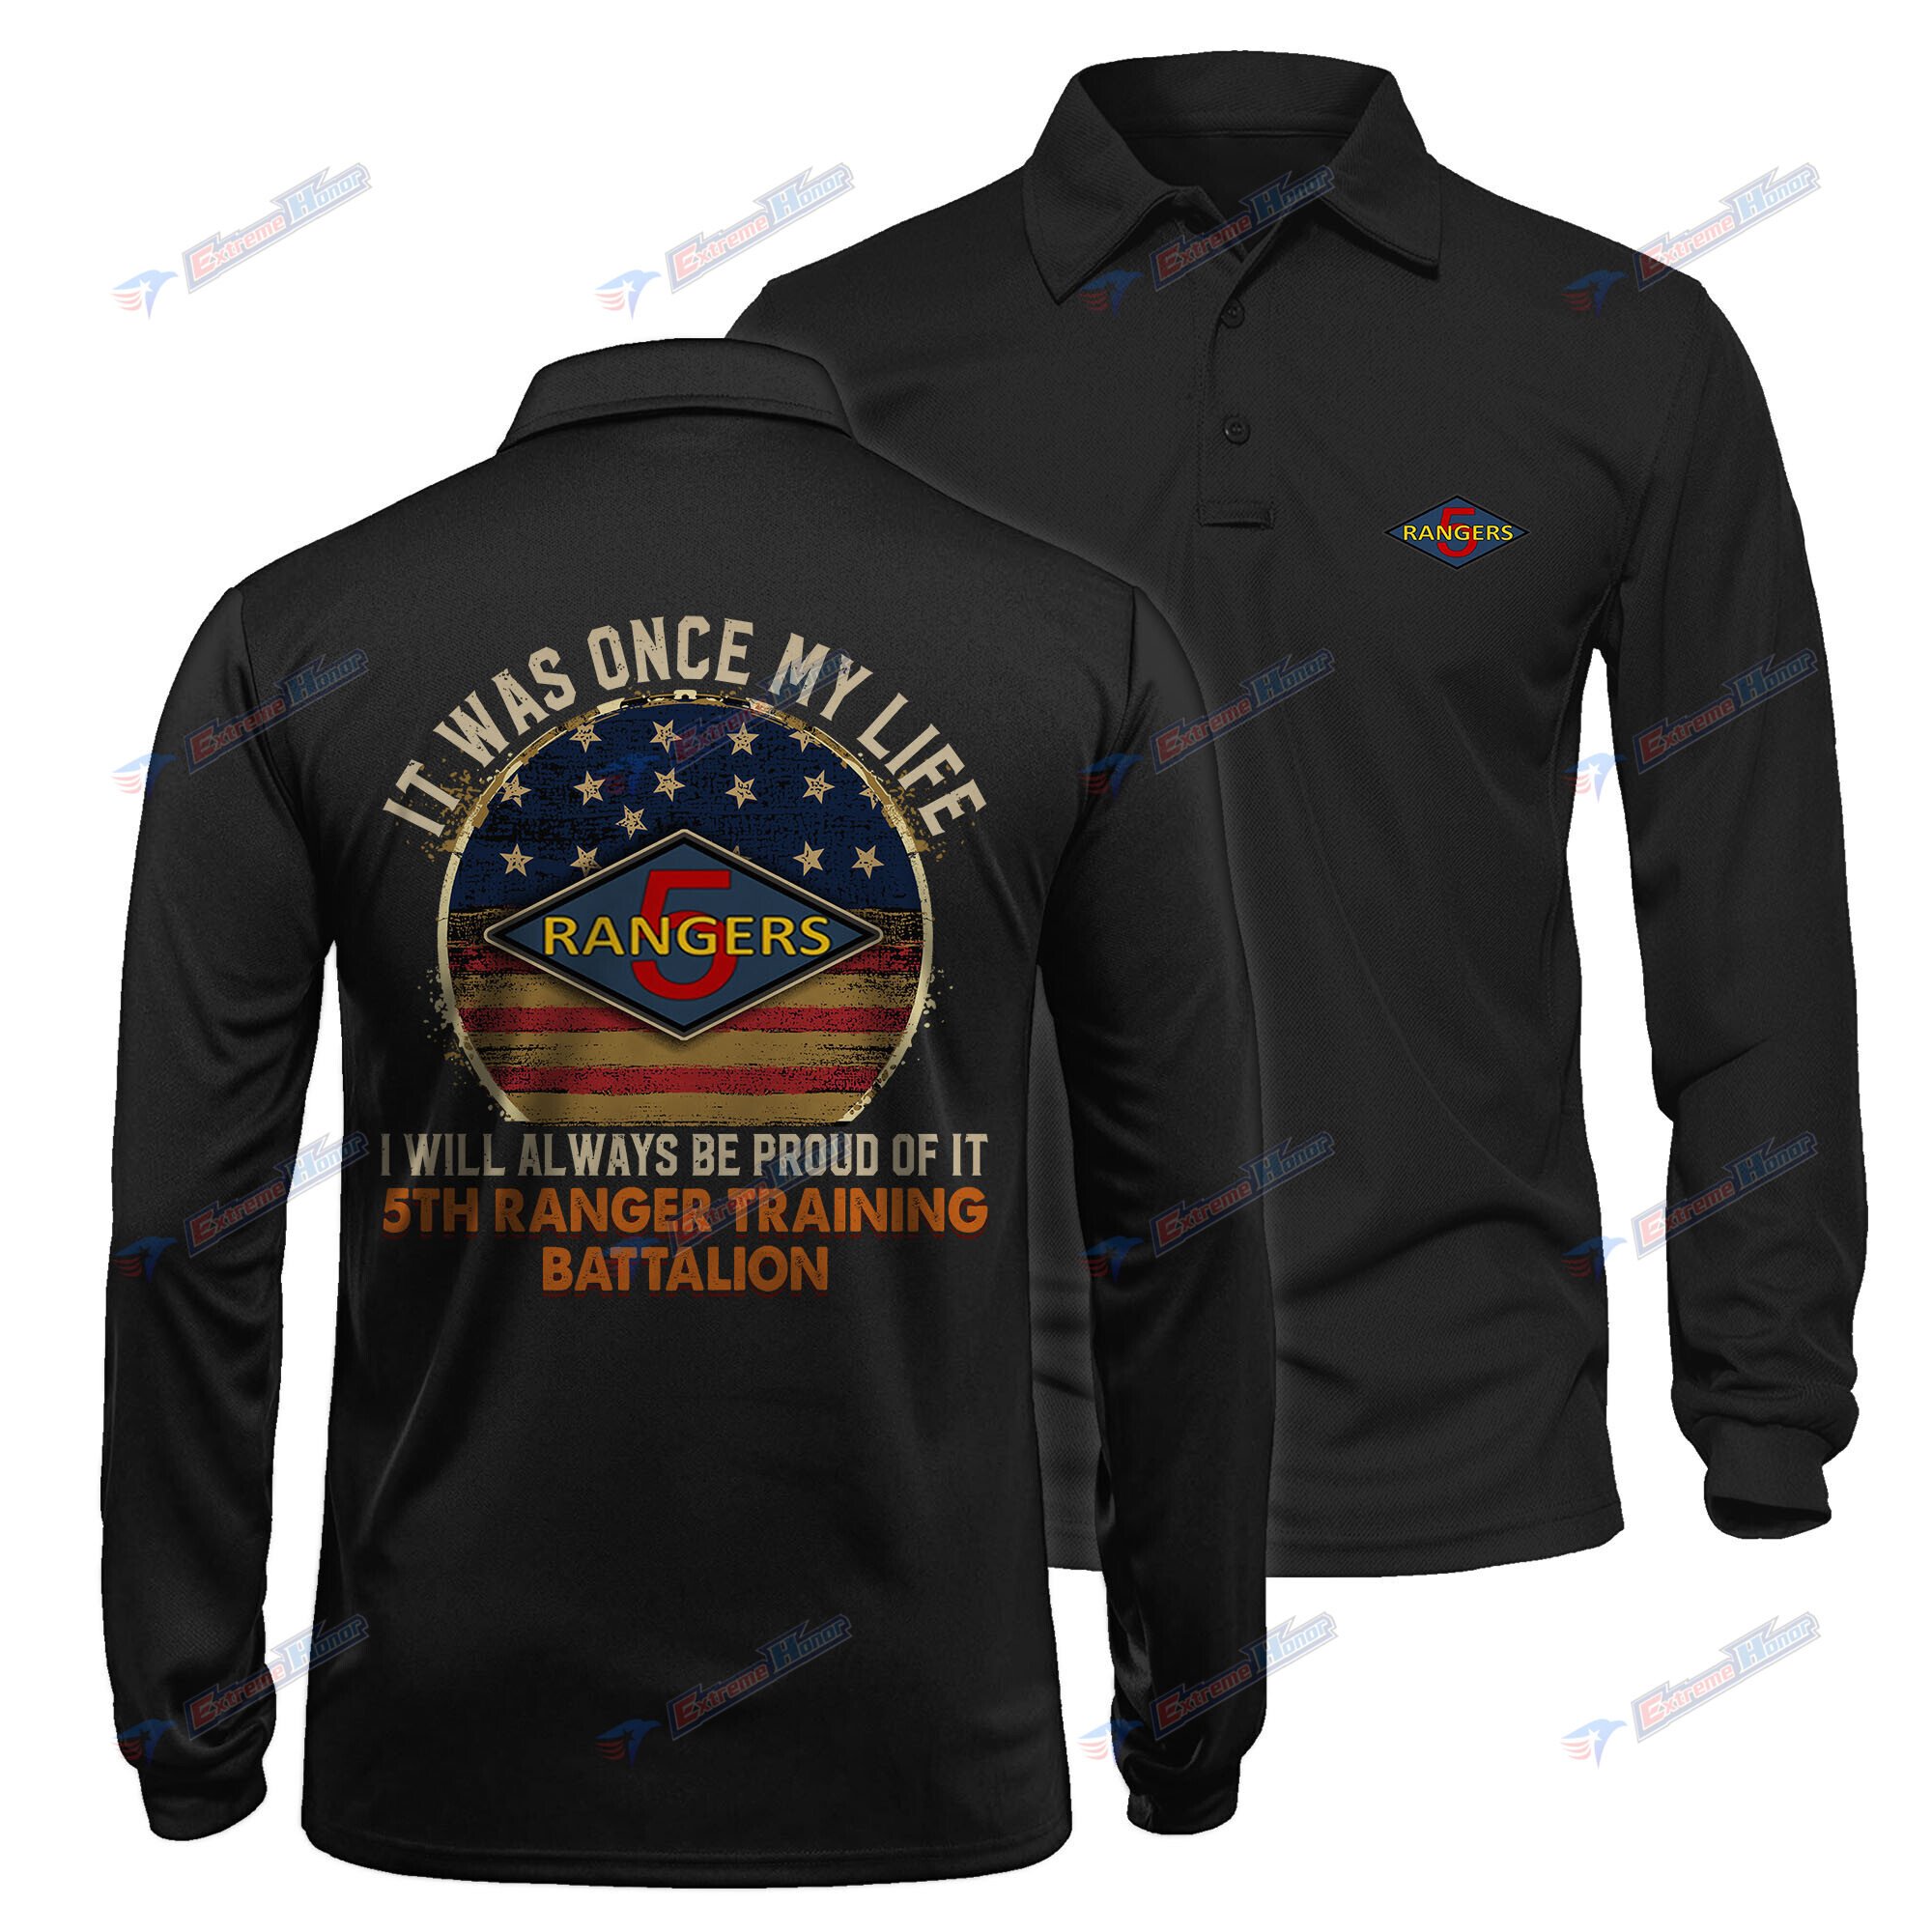 5th Ranger Training Battalion - Men's Polo Shirt Quick Dry Performance -  extreme-honor